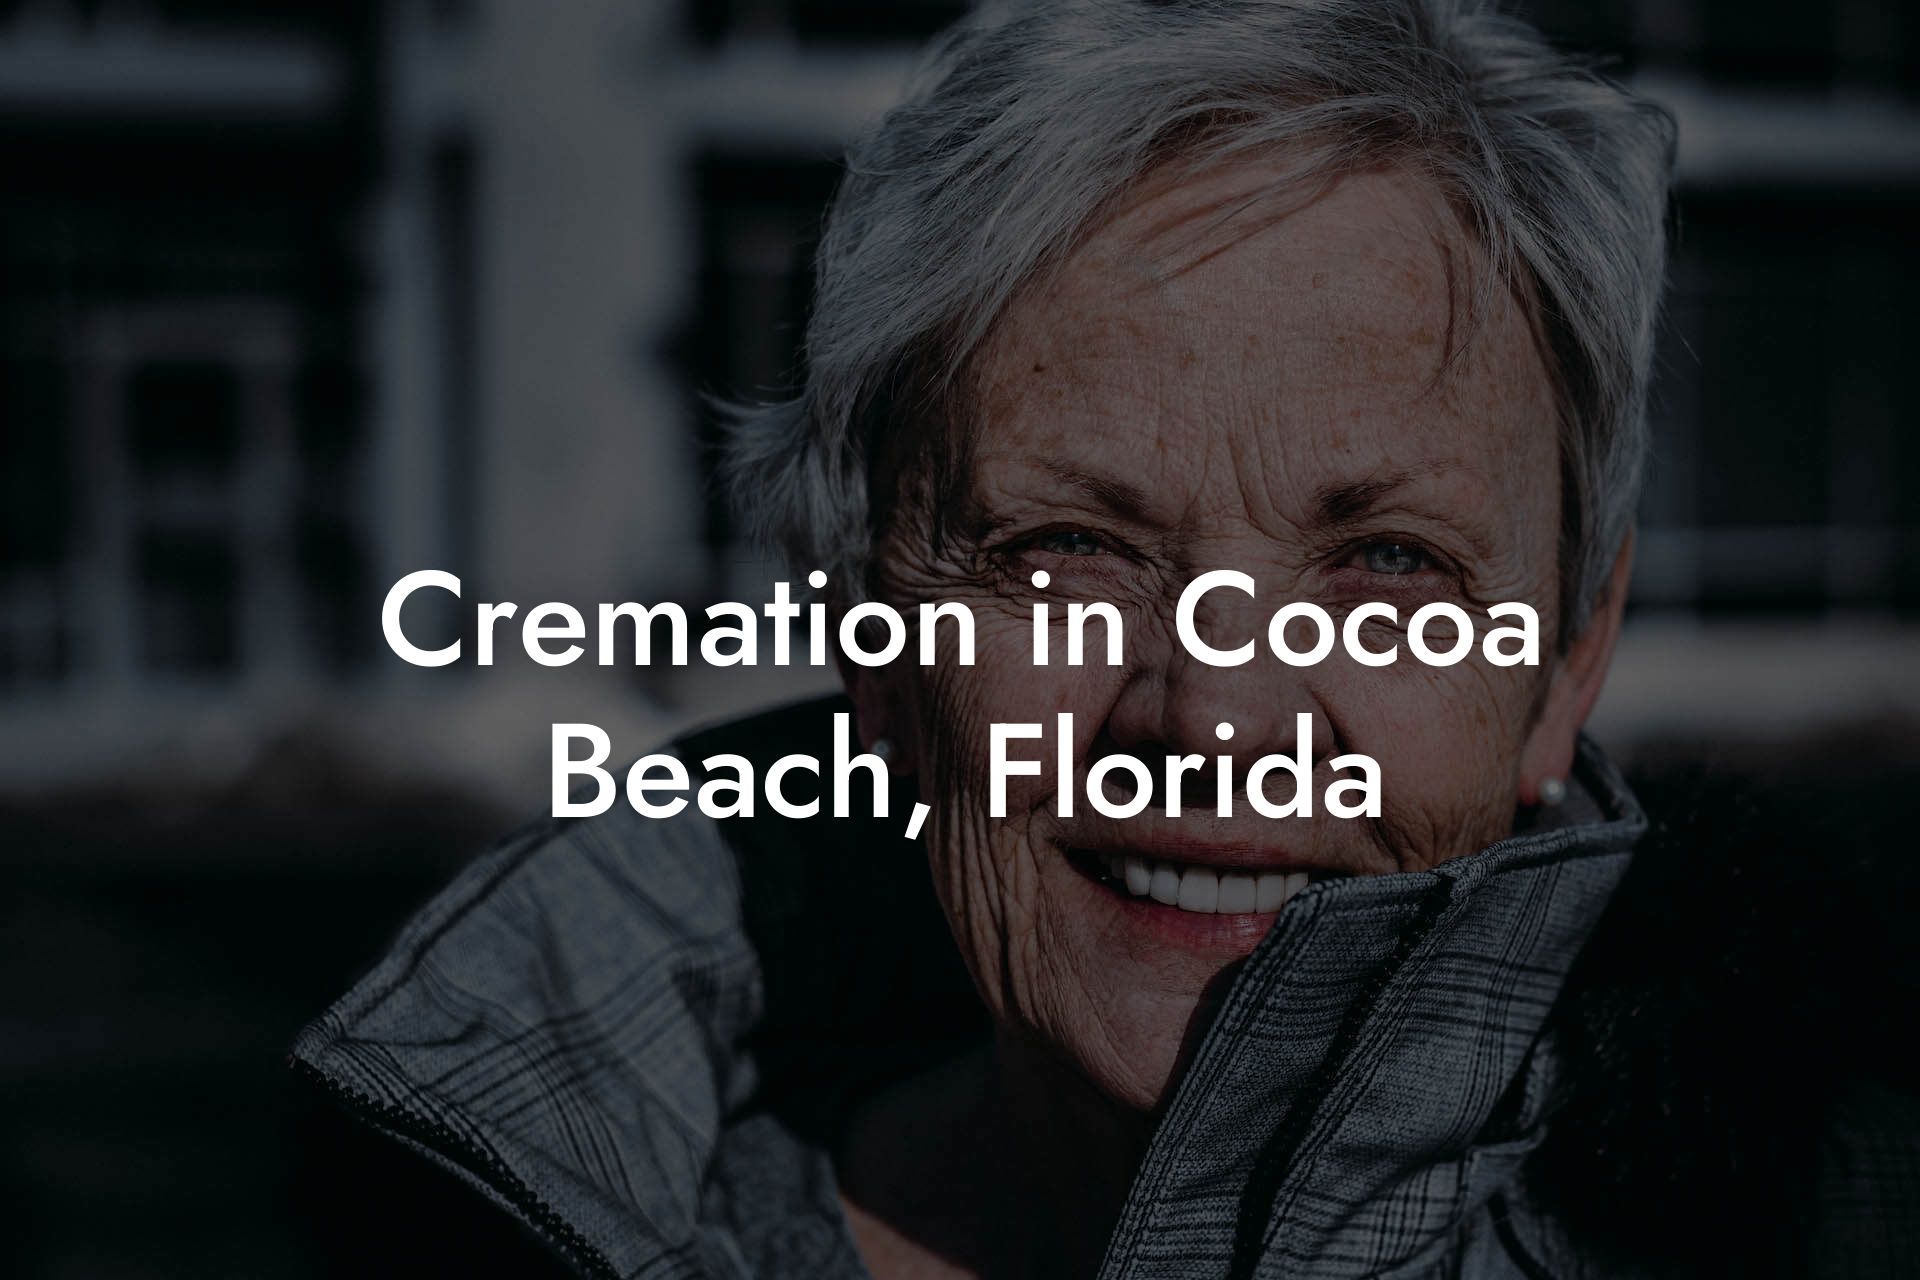 Cremation in Cocoa Beach, Florida